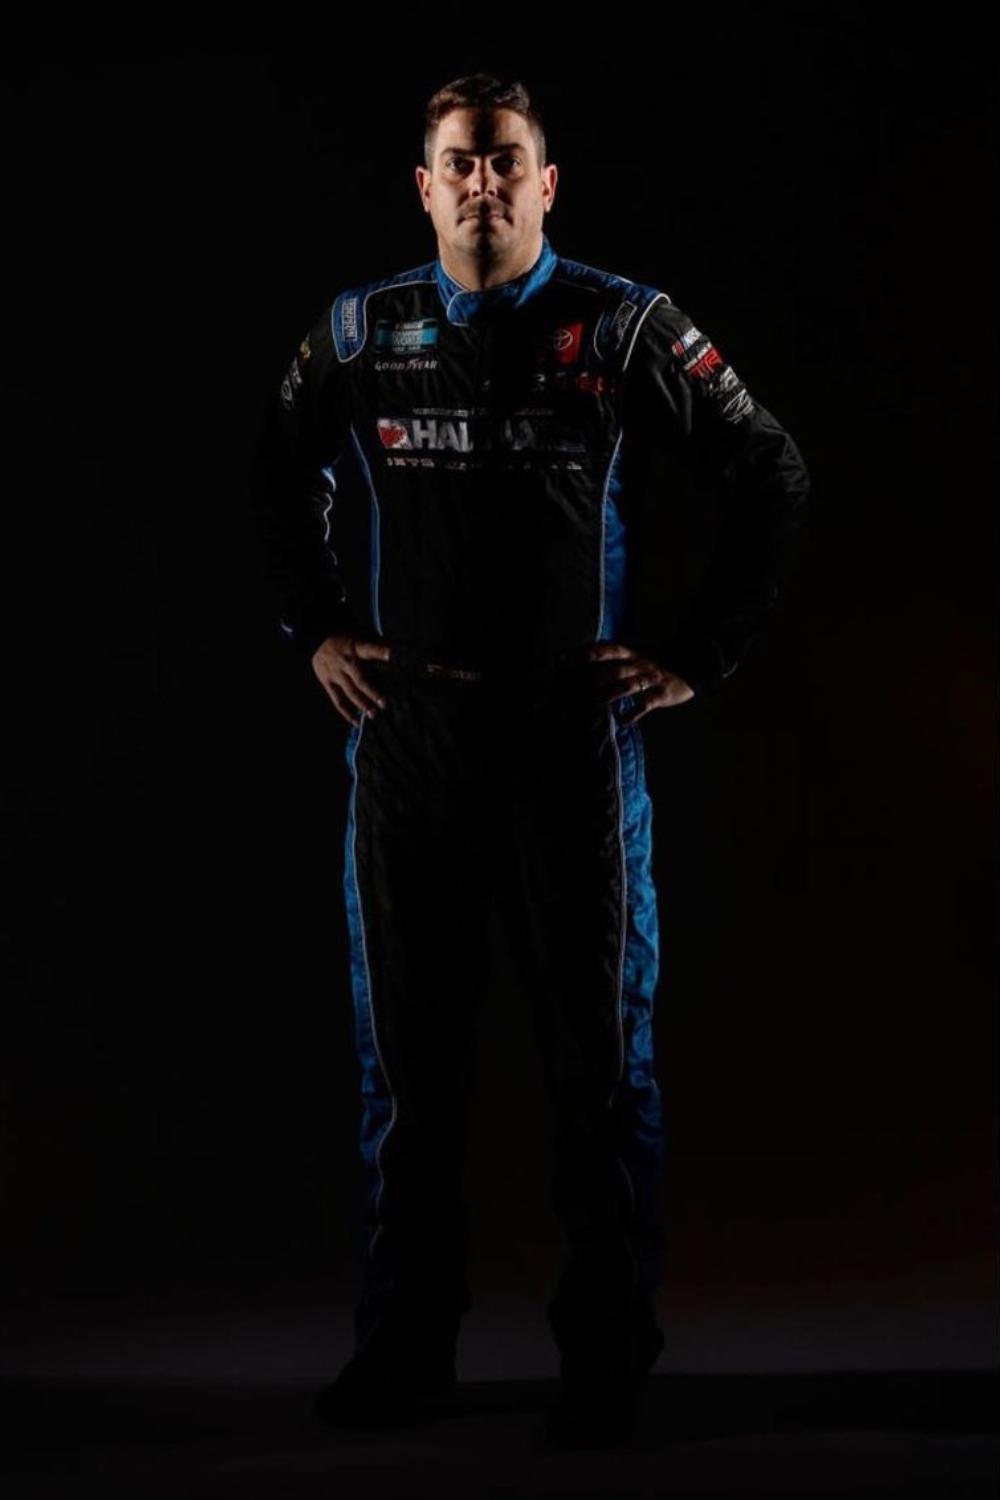 Stewart Friesen Ready With Halmar Friesen Racing Team For The 2022 Season Of NASCAR